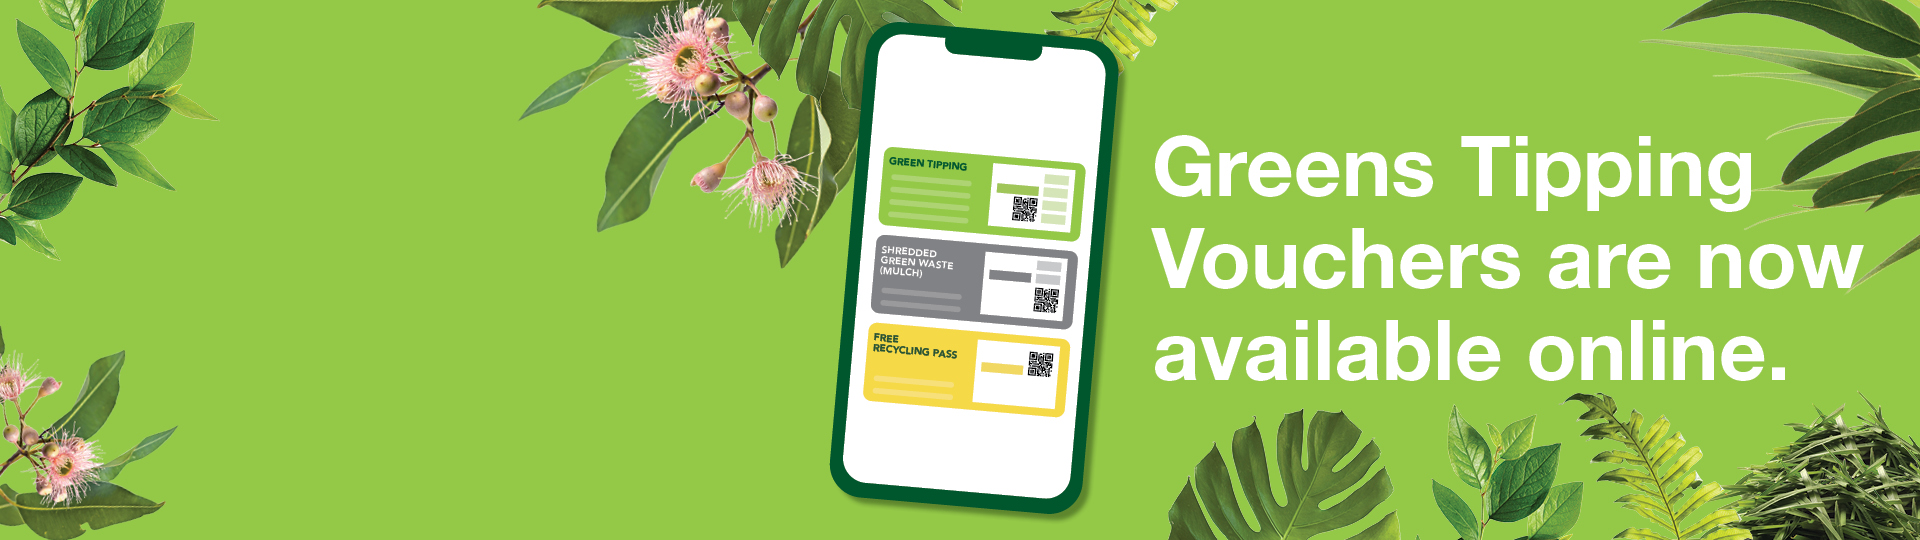 Online greens vouchers